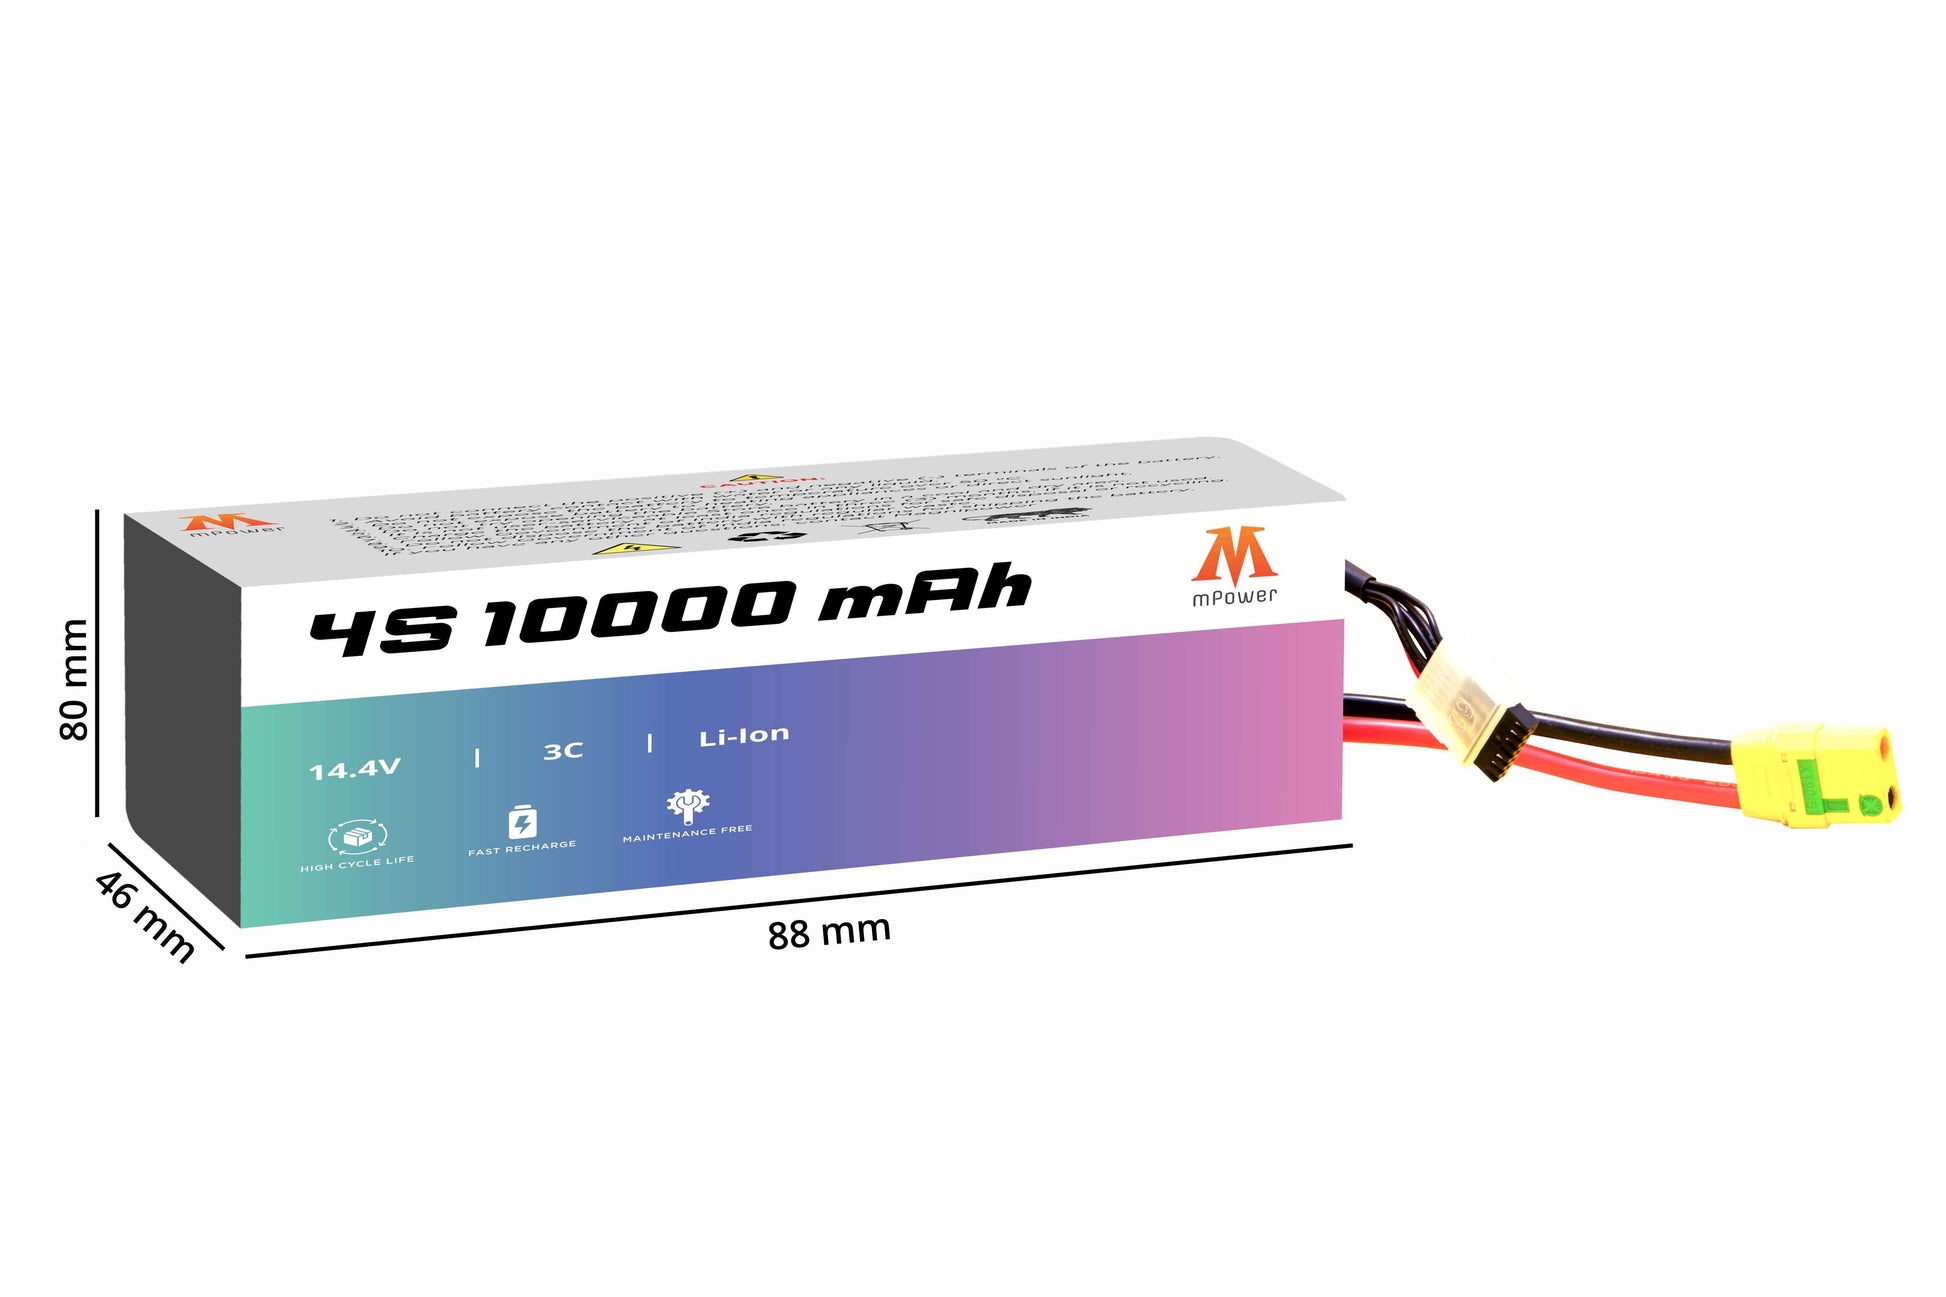 mPower 4S 10000mAh Lithium-Ion Battery for Surveillance Drones-mpowerlithium